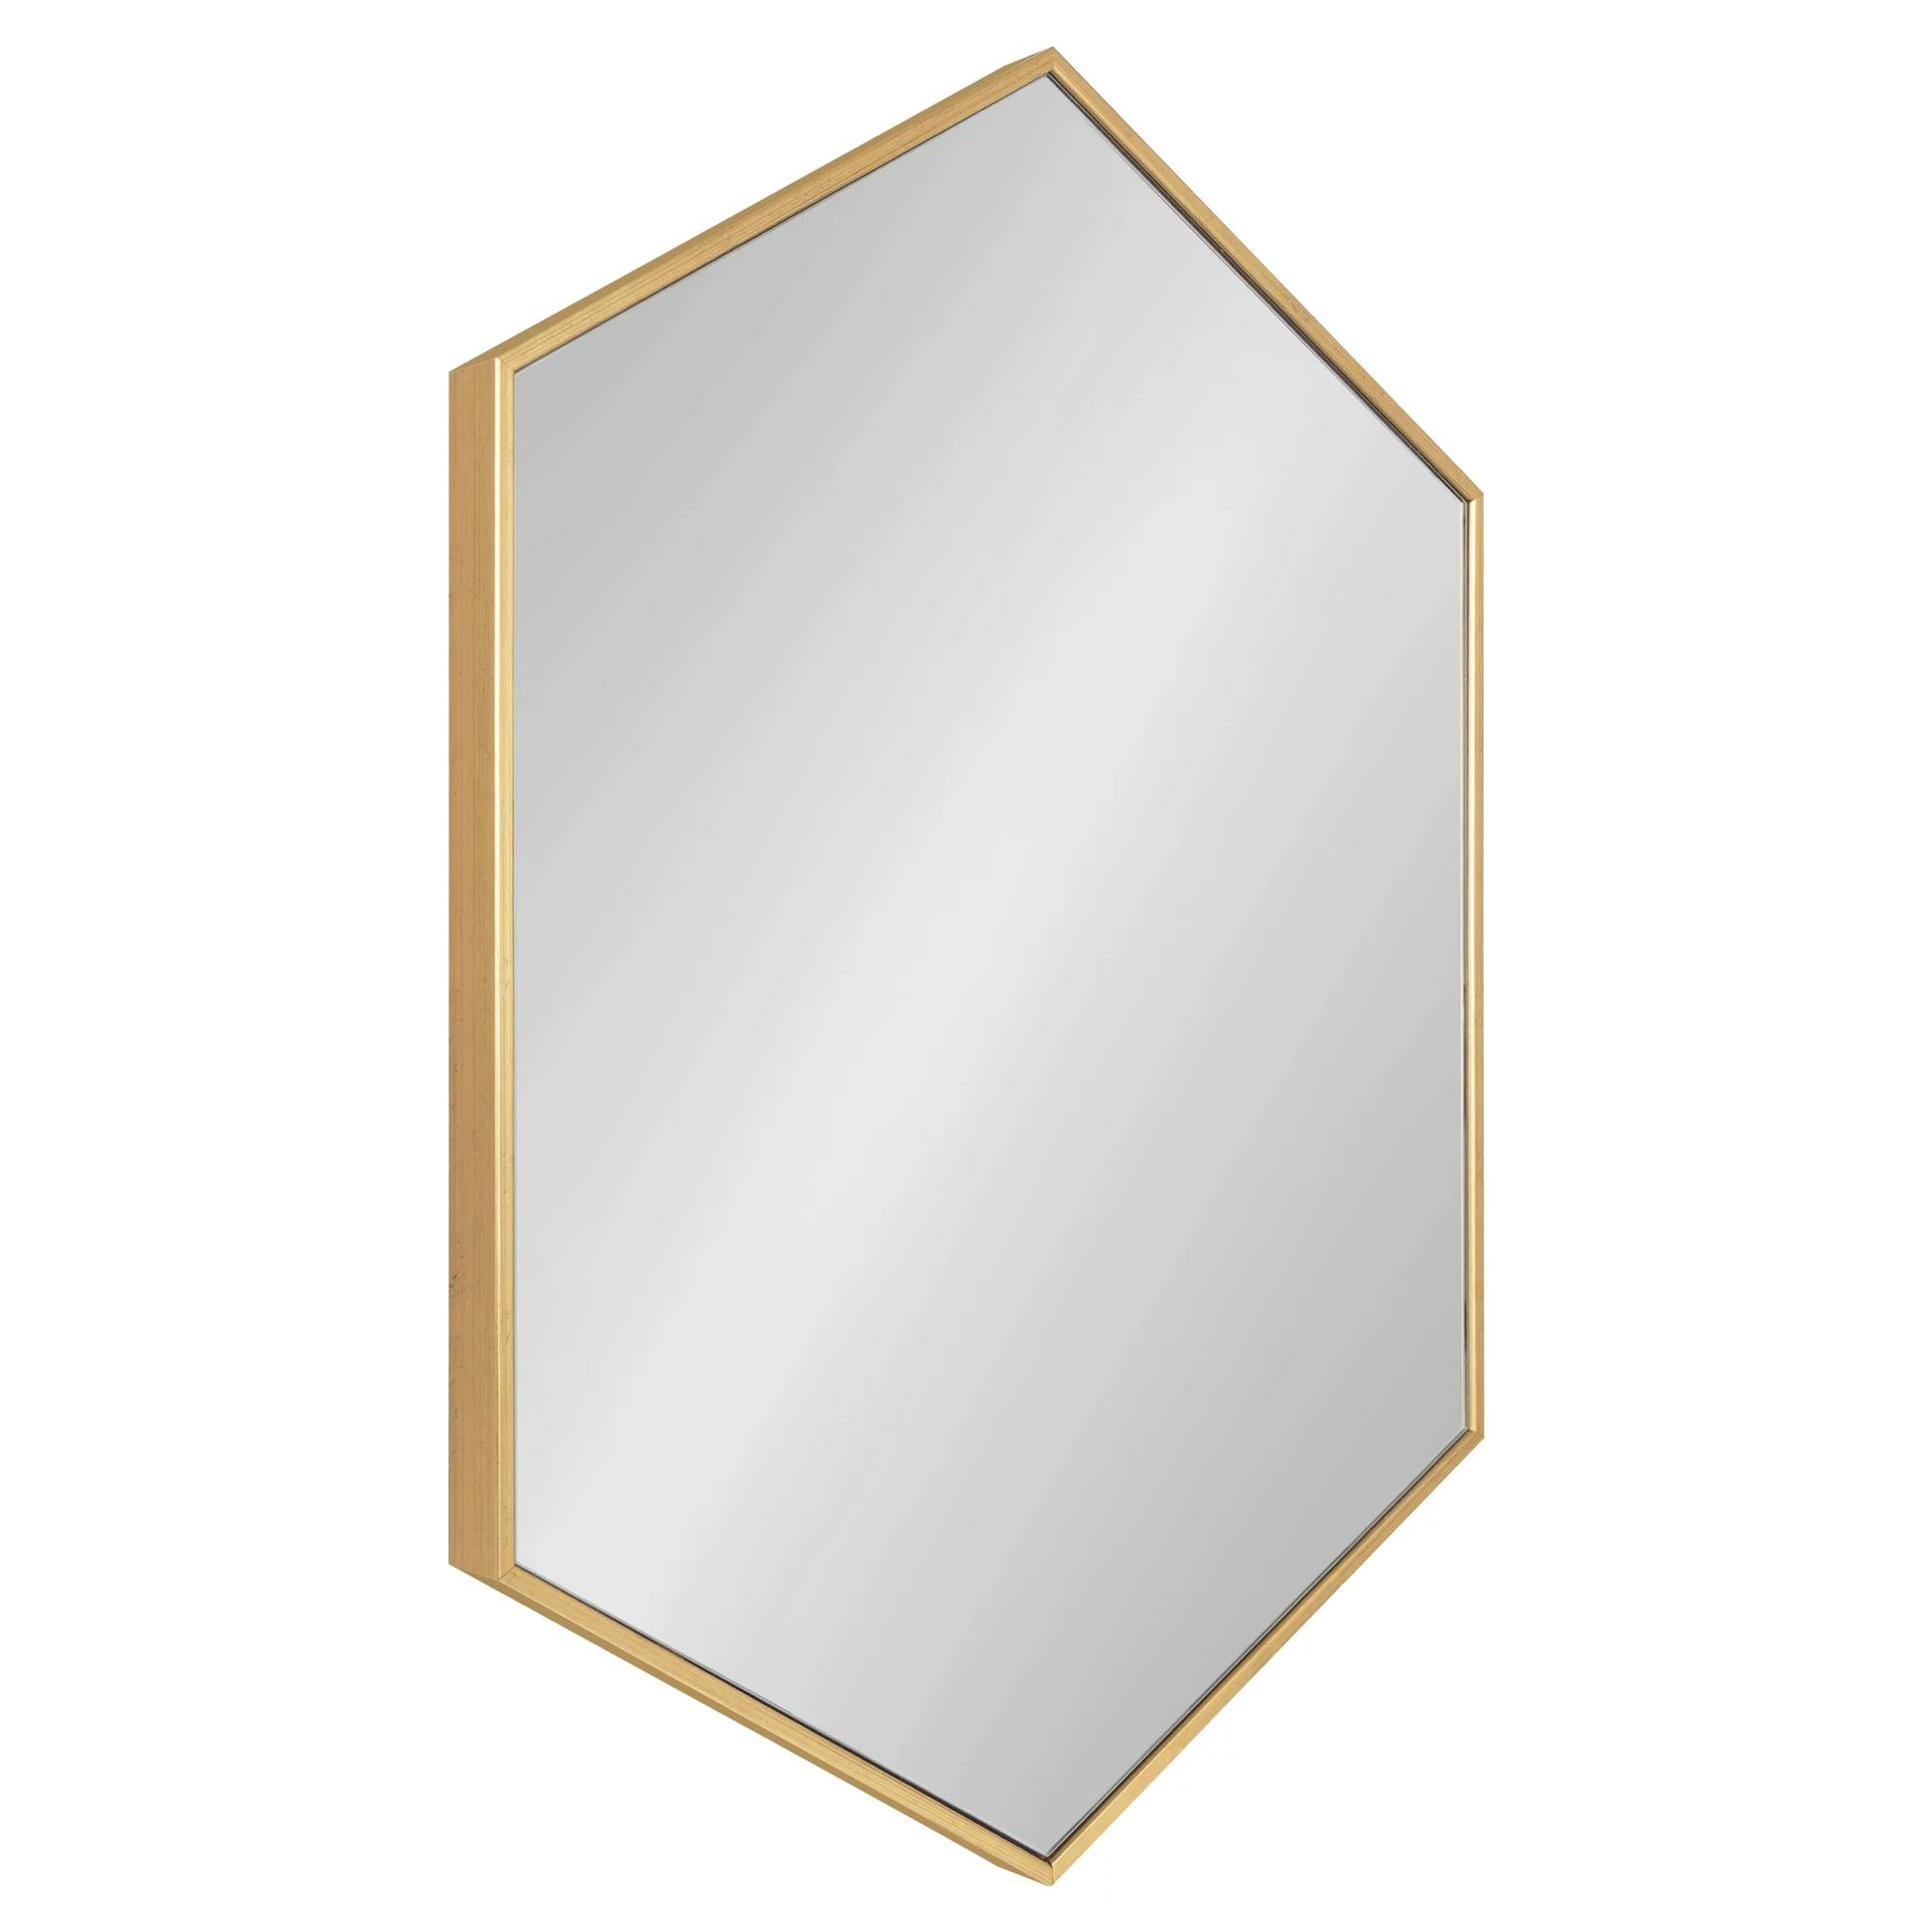 Kate and Laurel Rhodes Modern Hexagon Wall Mirror, 24" x 36", Gold, Chic Geometric Wall Mirror | Walmart (US)